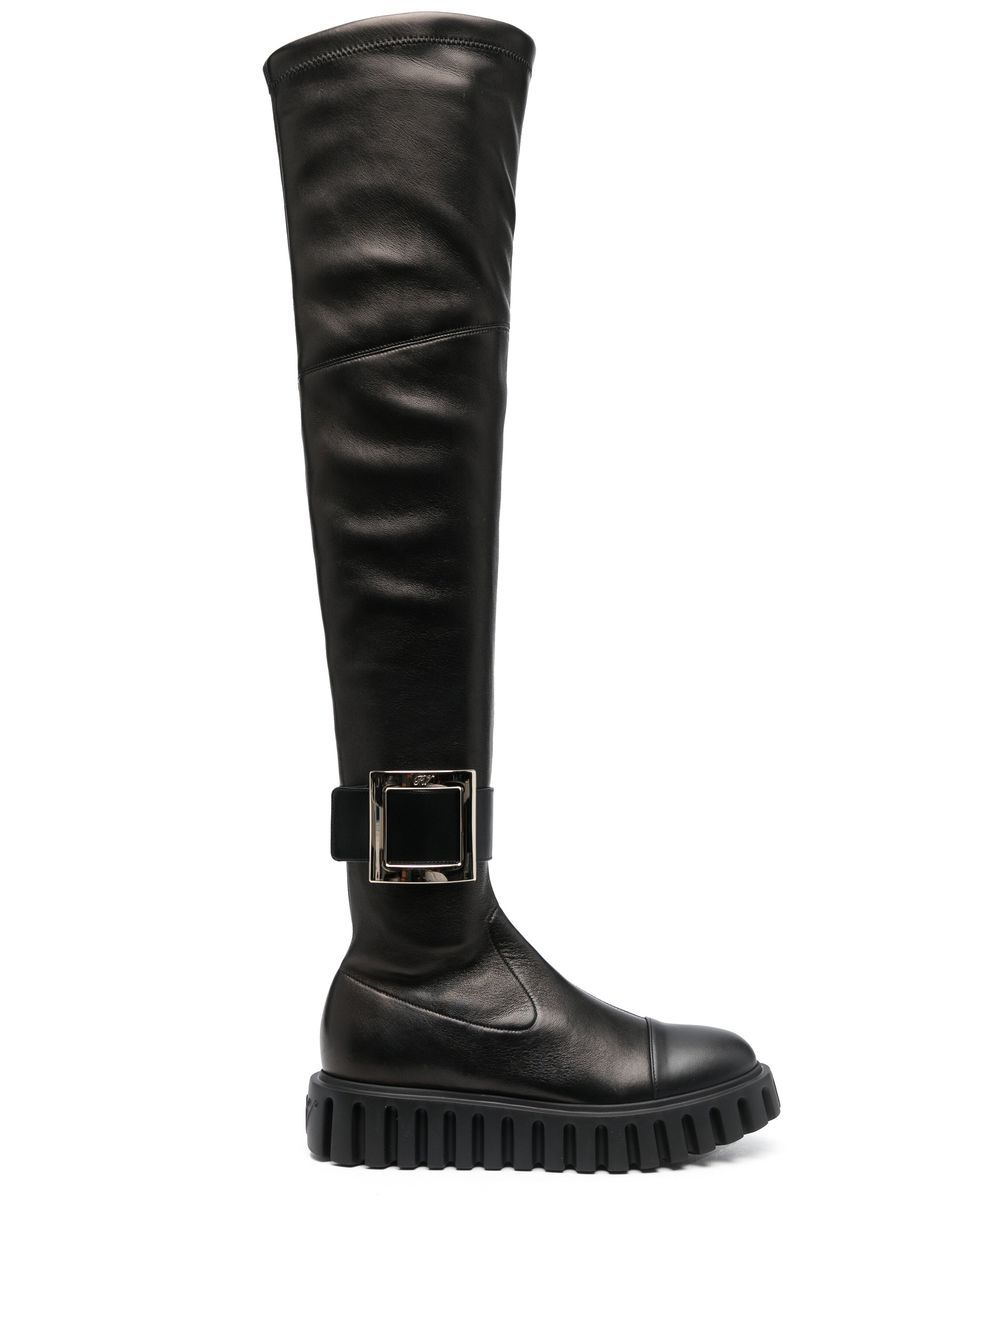 Go-thick roger vivier viv boots black